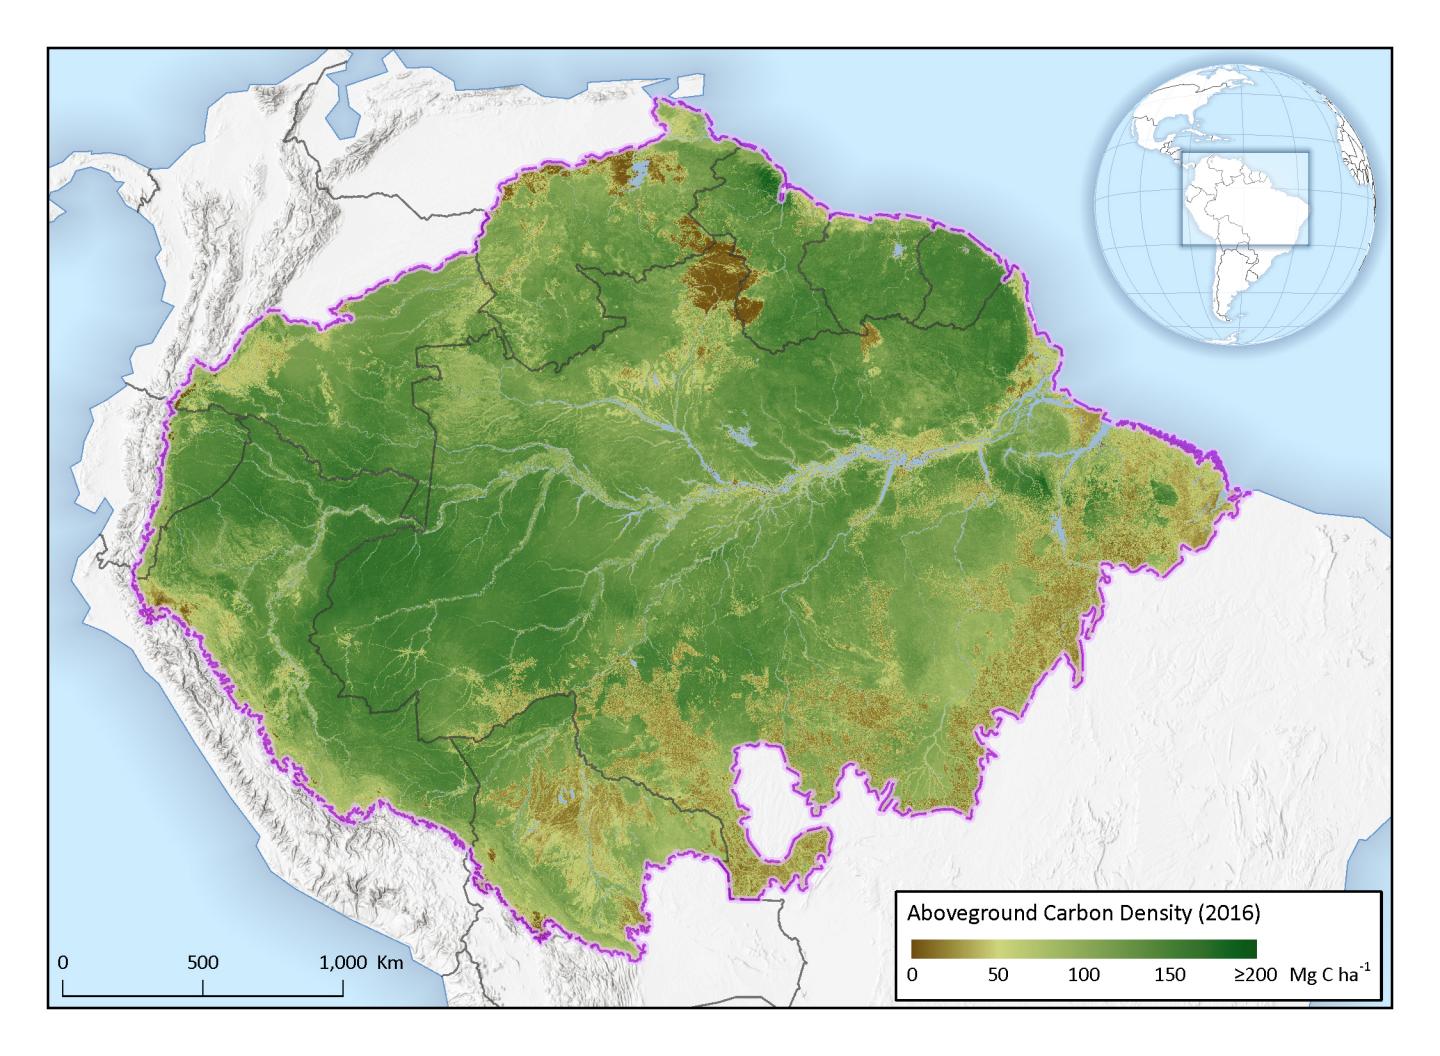 Distribution of Aboveground Carbon Stock (ca. 2016) Across the Amazon Basin